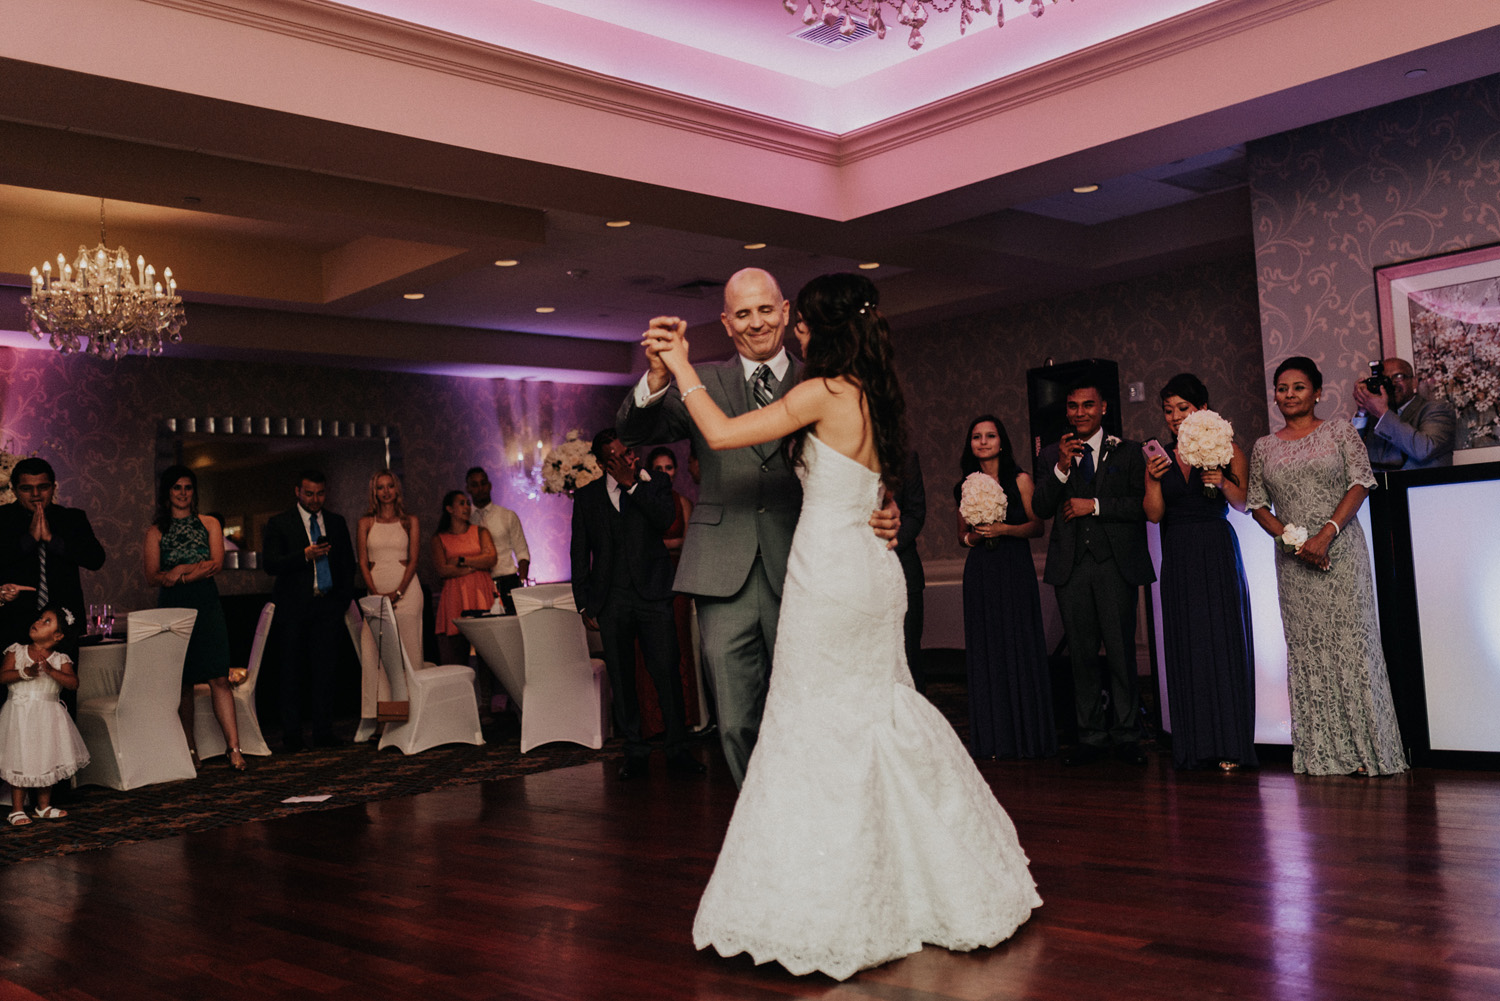 KyleWillisPhoto-Kyle-Willis-Photography-The-Radisson-Hotel-Freehold-New-Jersey-Wedding-Emerald-Ballroom-Spanish-Latino-Philadelphia-South-Engagement